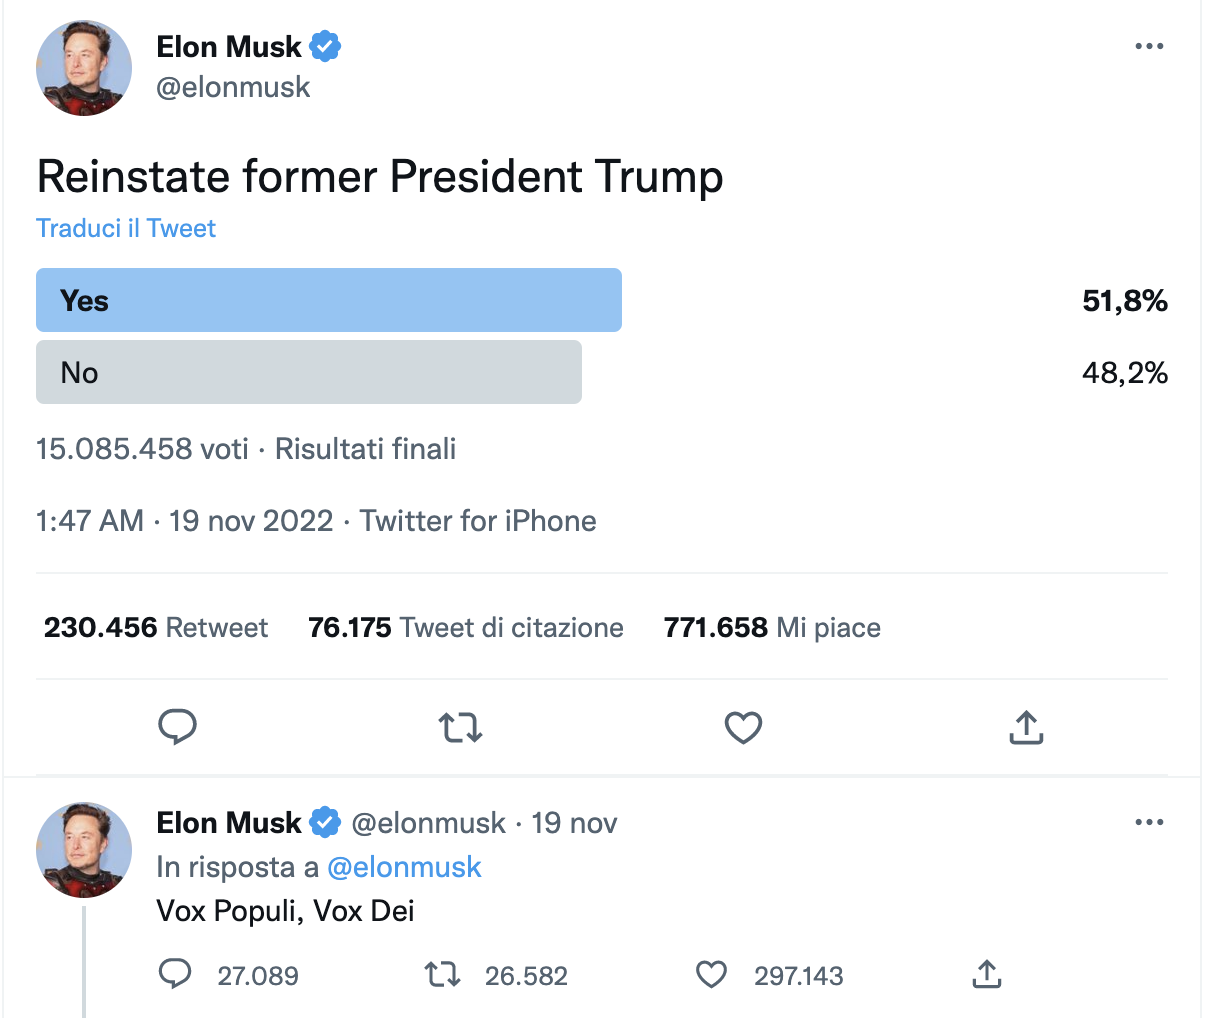 Elon Musk survey to reinstate Trump on Twitter